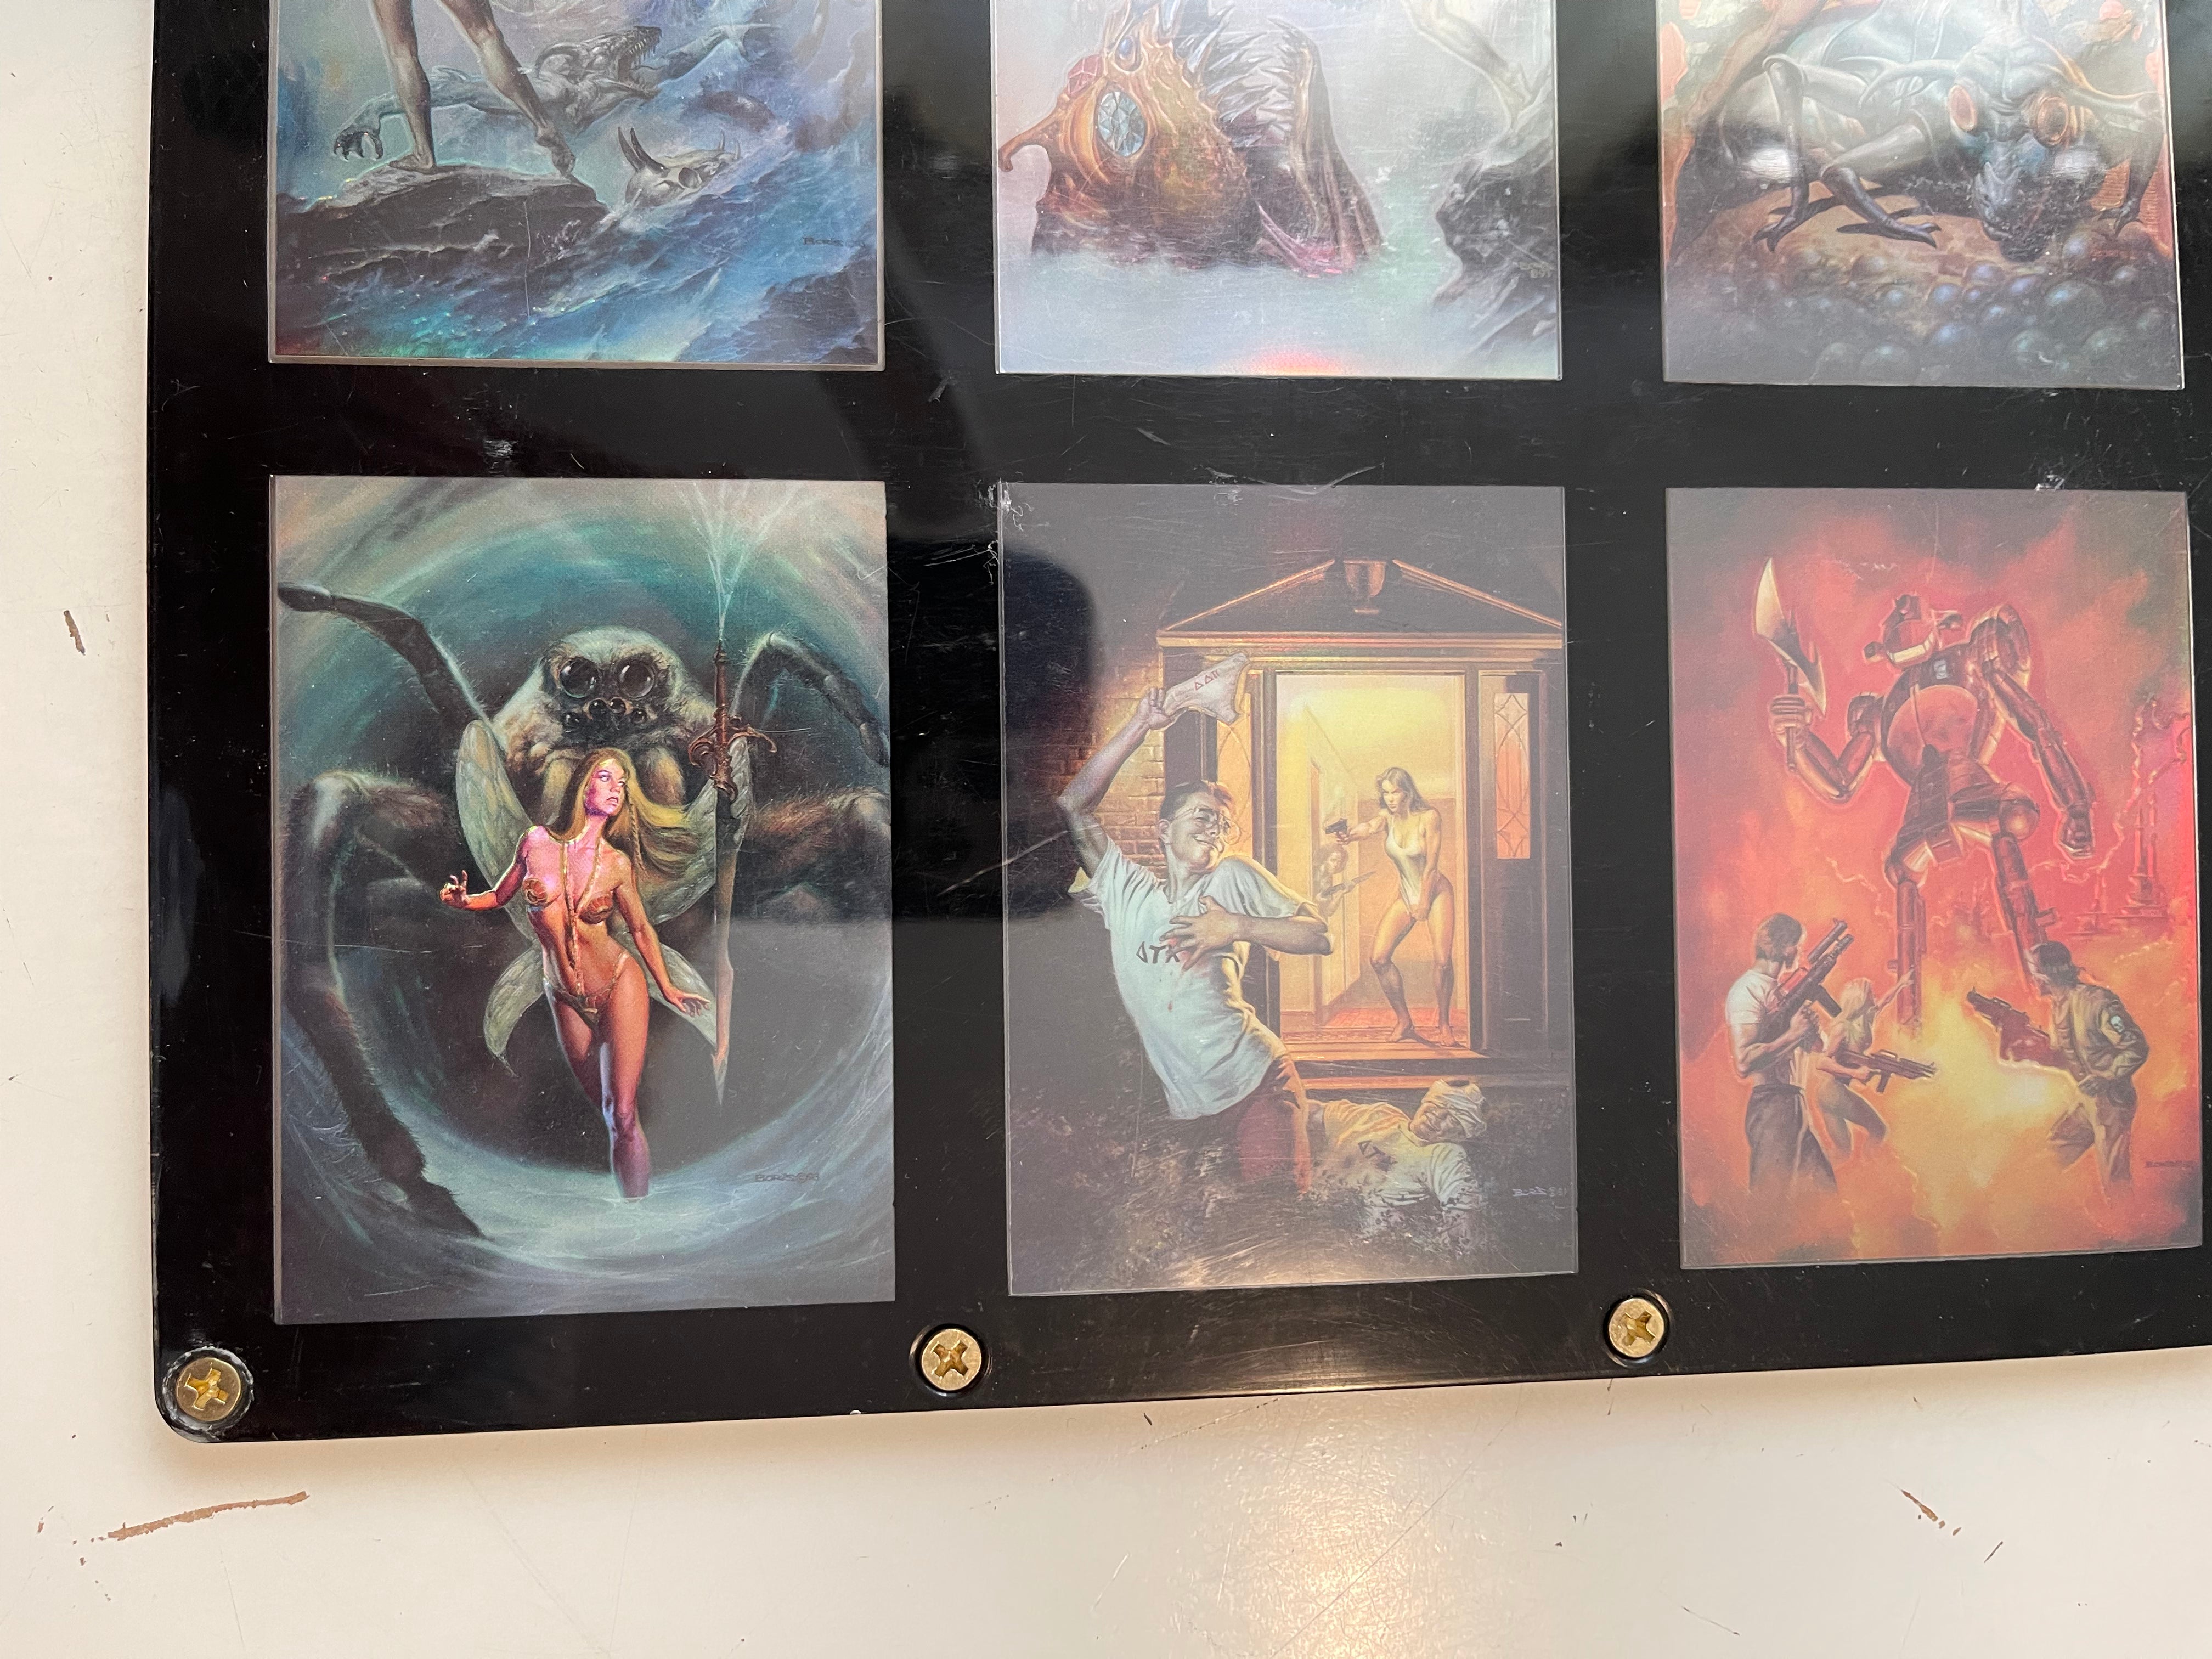 Boris Vallejo fantasy artist rare Chrome insert cards set in frame